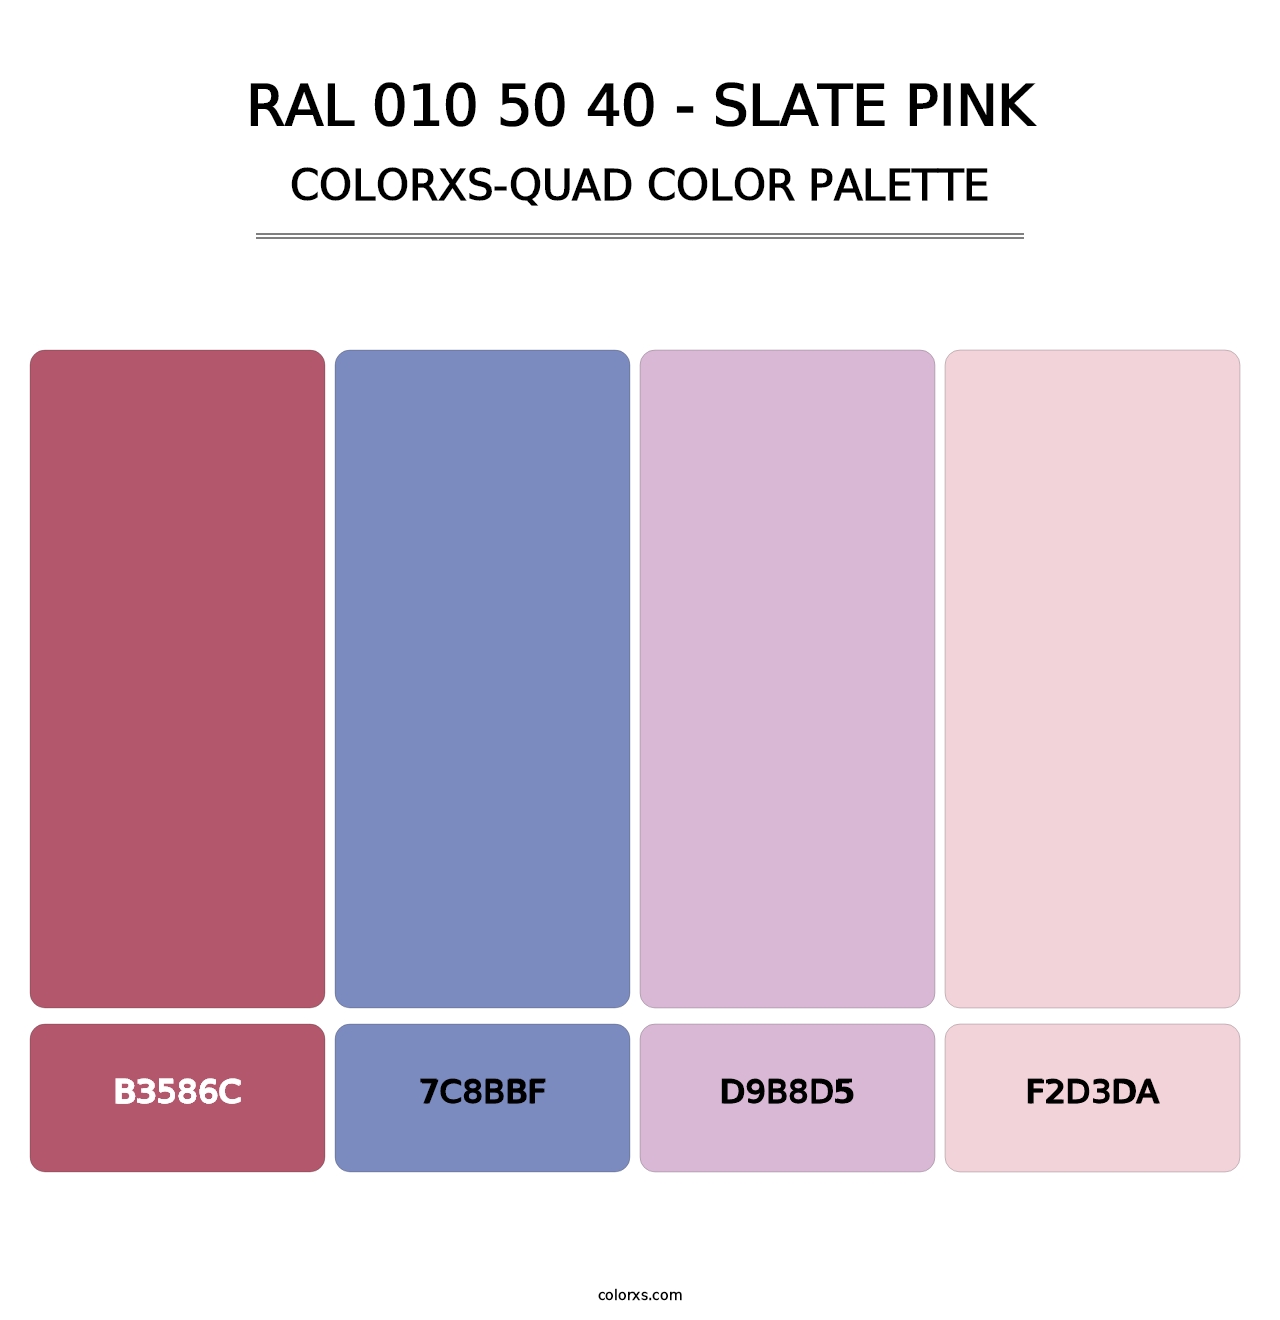 RAL 010 50 40 - Slate Pink - Colorxs Quad Palette